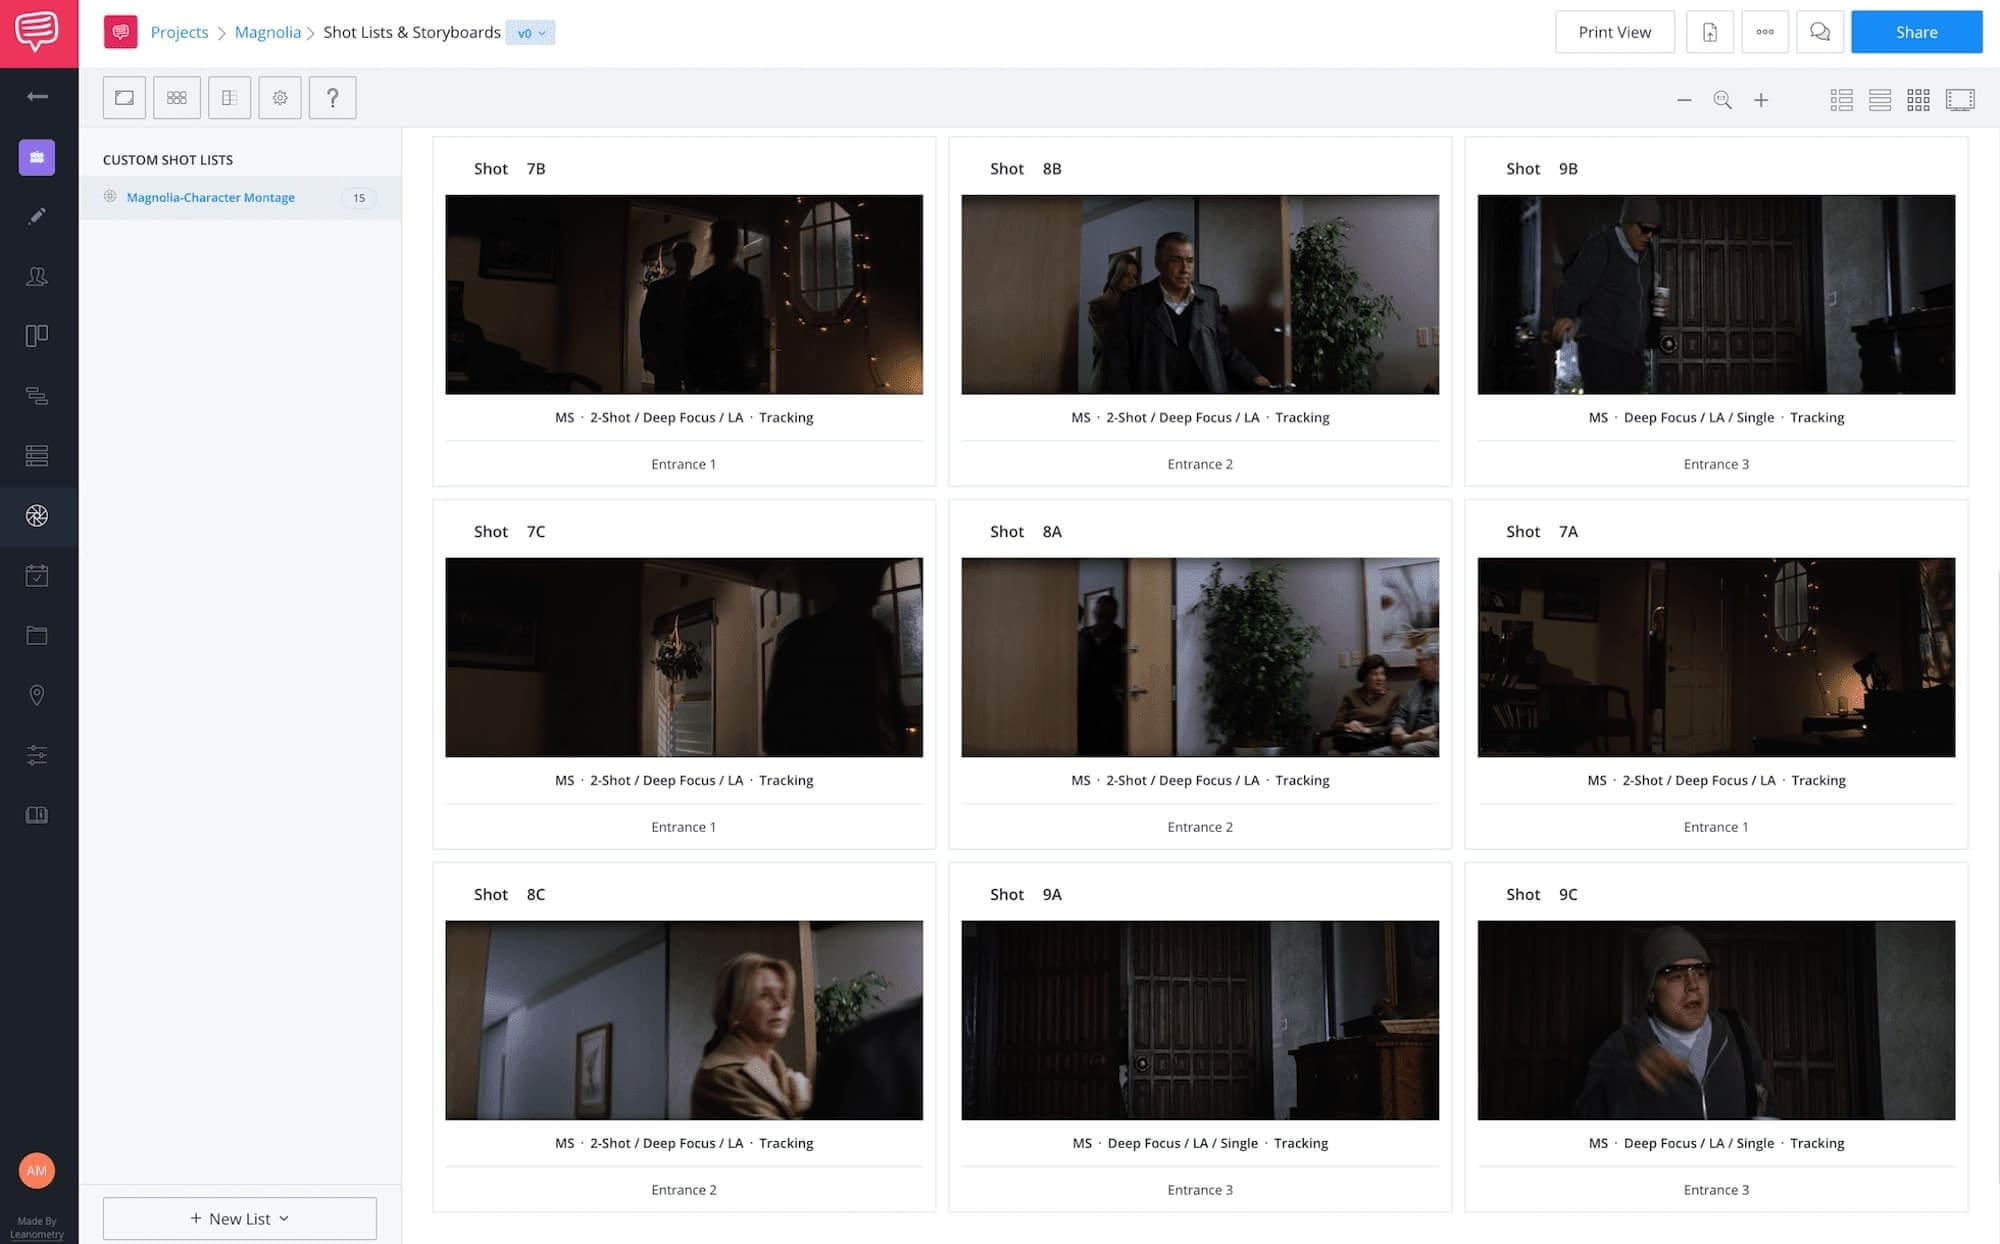 Paul Thomas Anderson Movies - Magnolia - StudioBinder Online Shot Listing Software